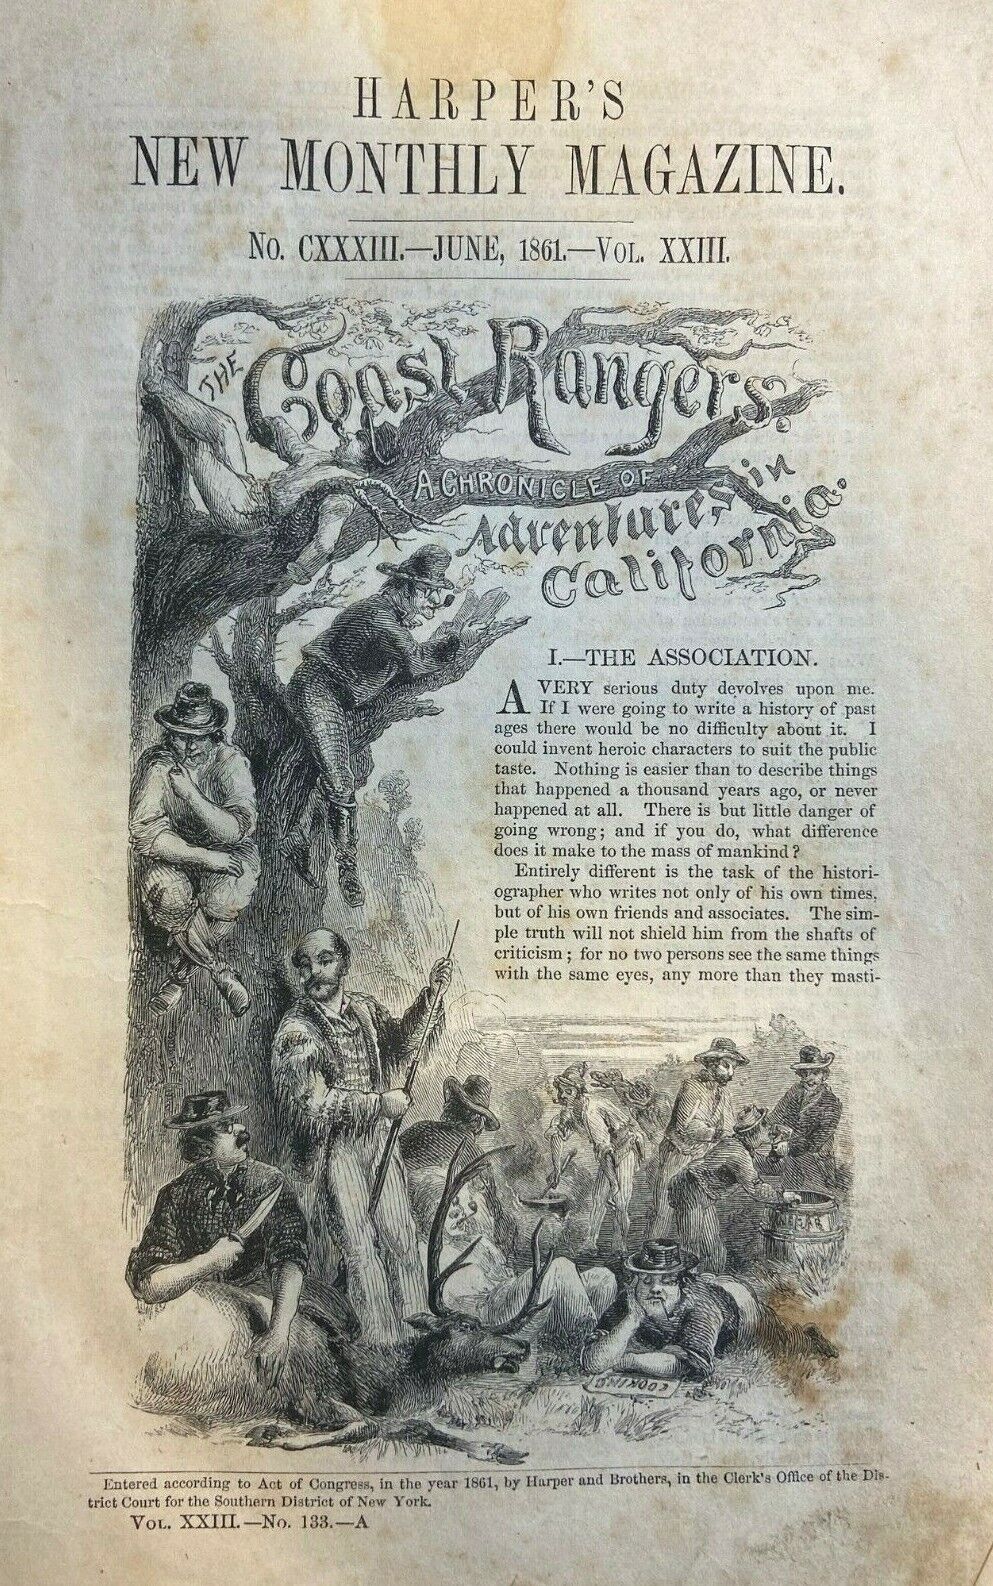 1861 Association of the California Coast Rangers illustrated